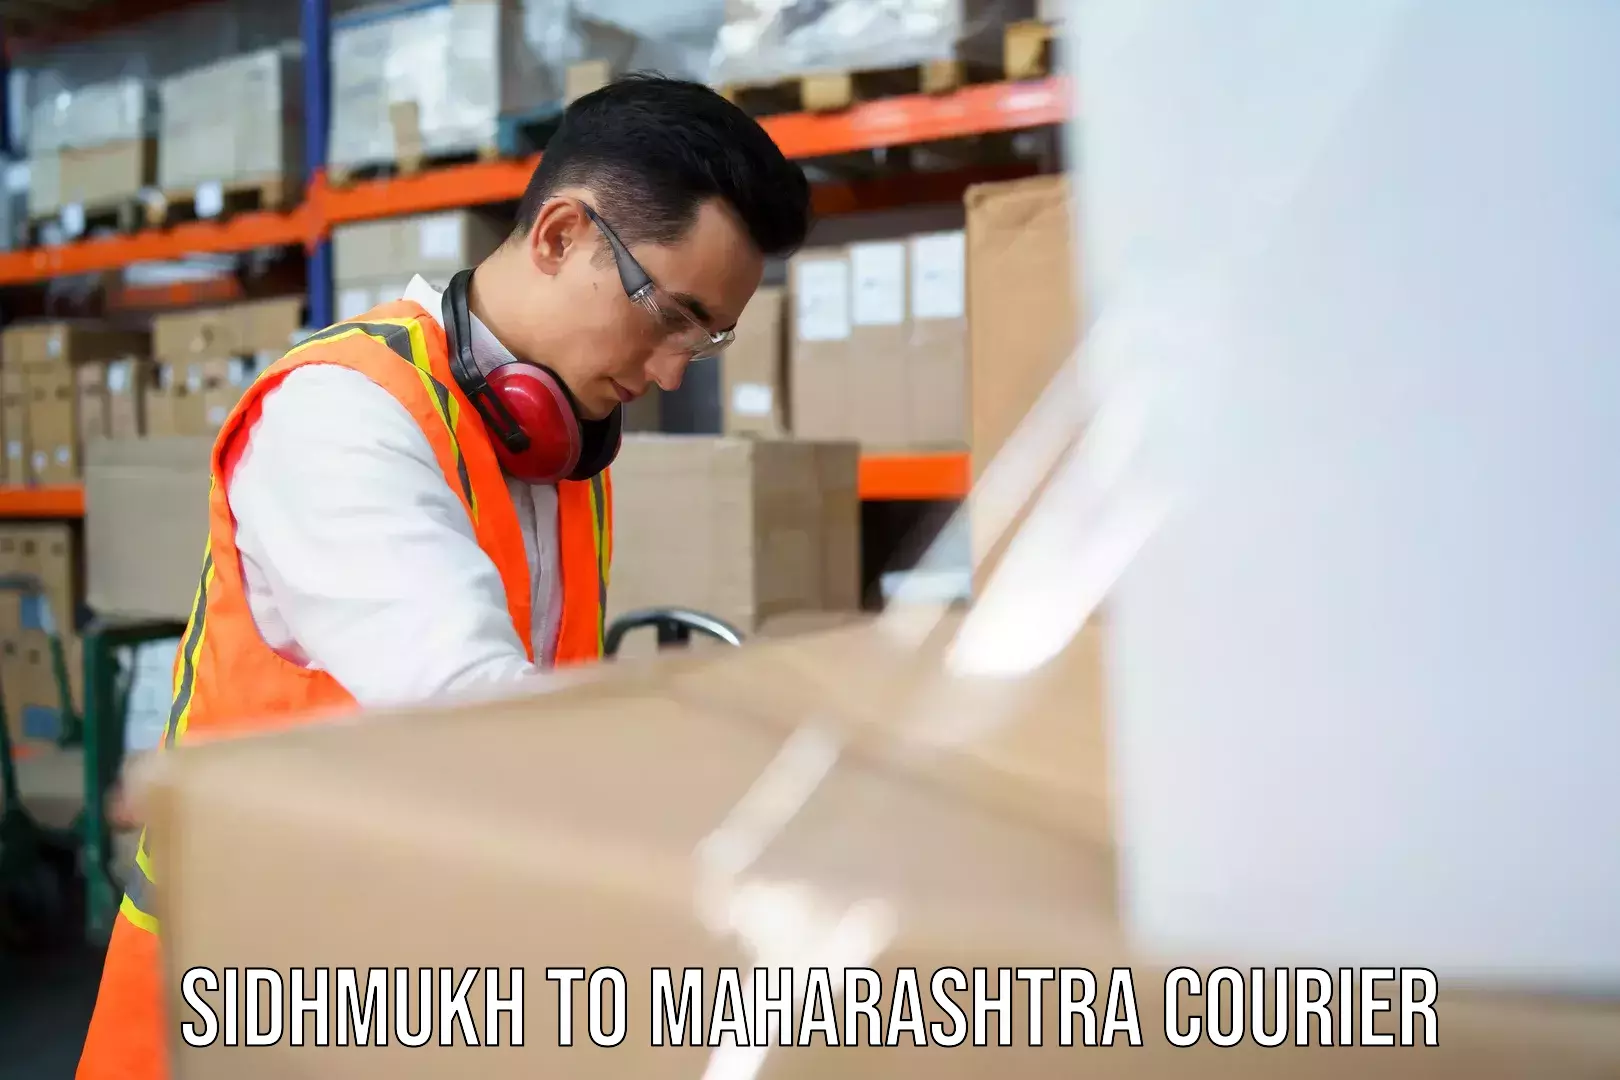 Nationwide shipping capabilities Sidhmukh to Maharashtra